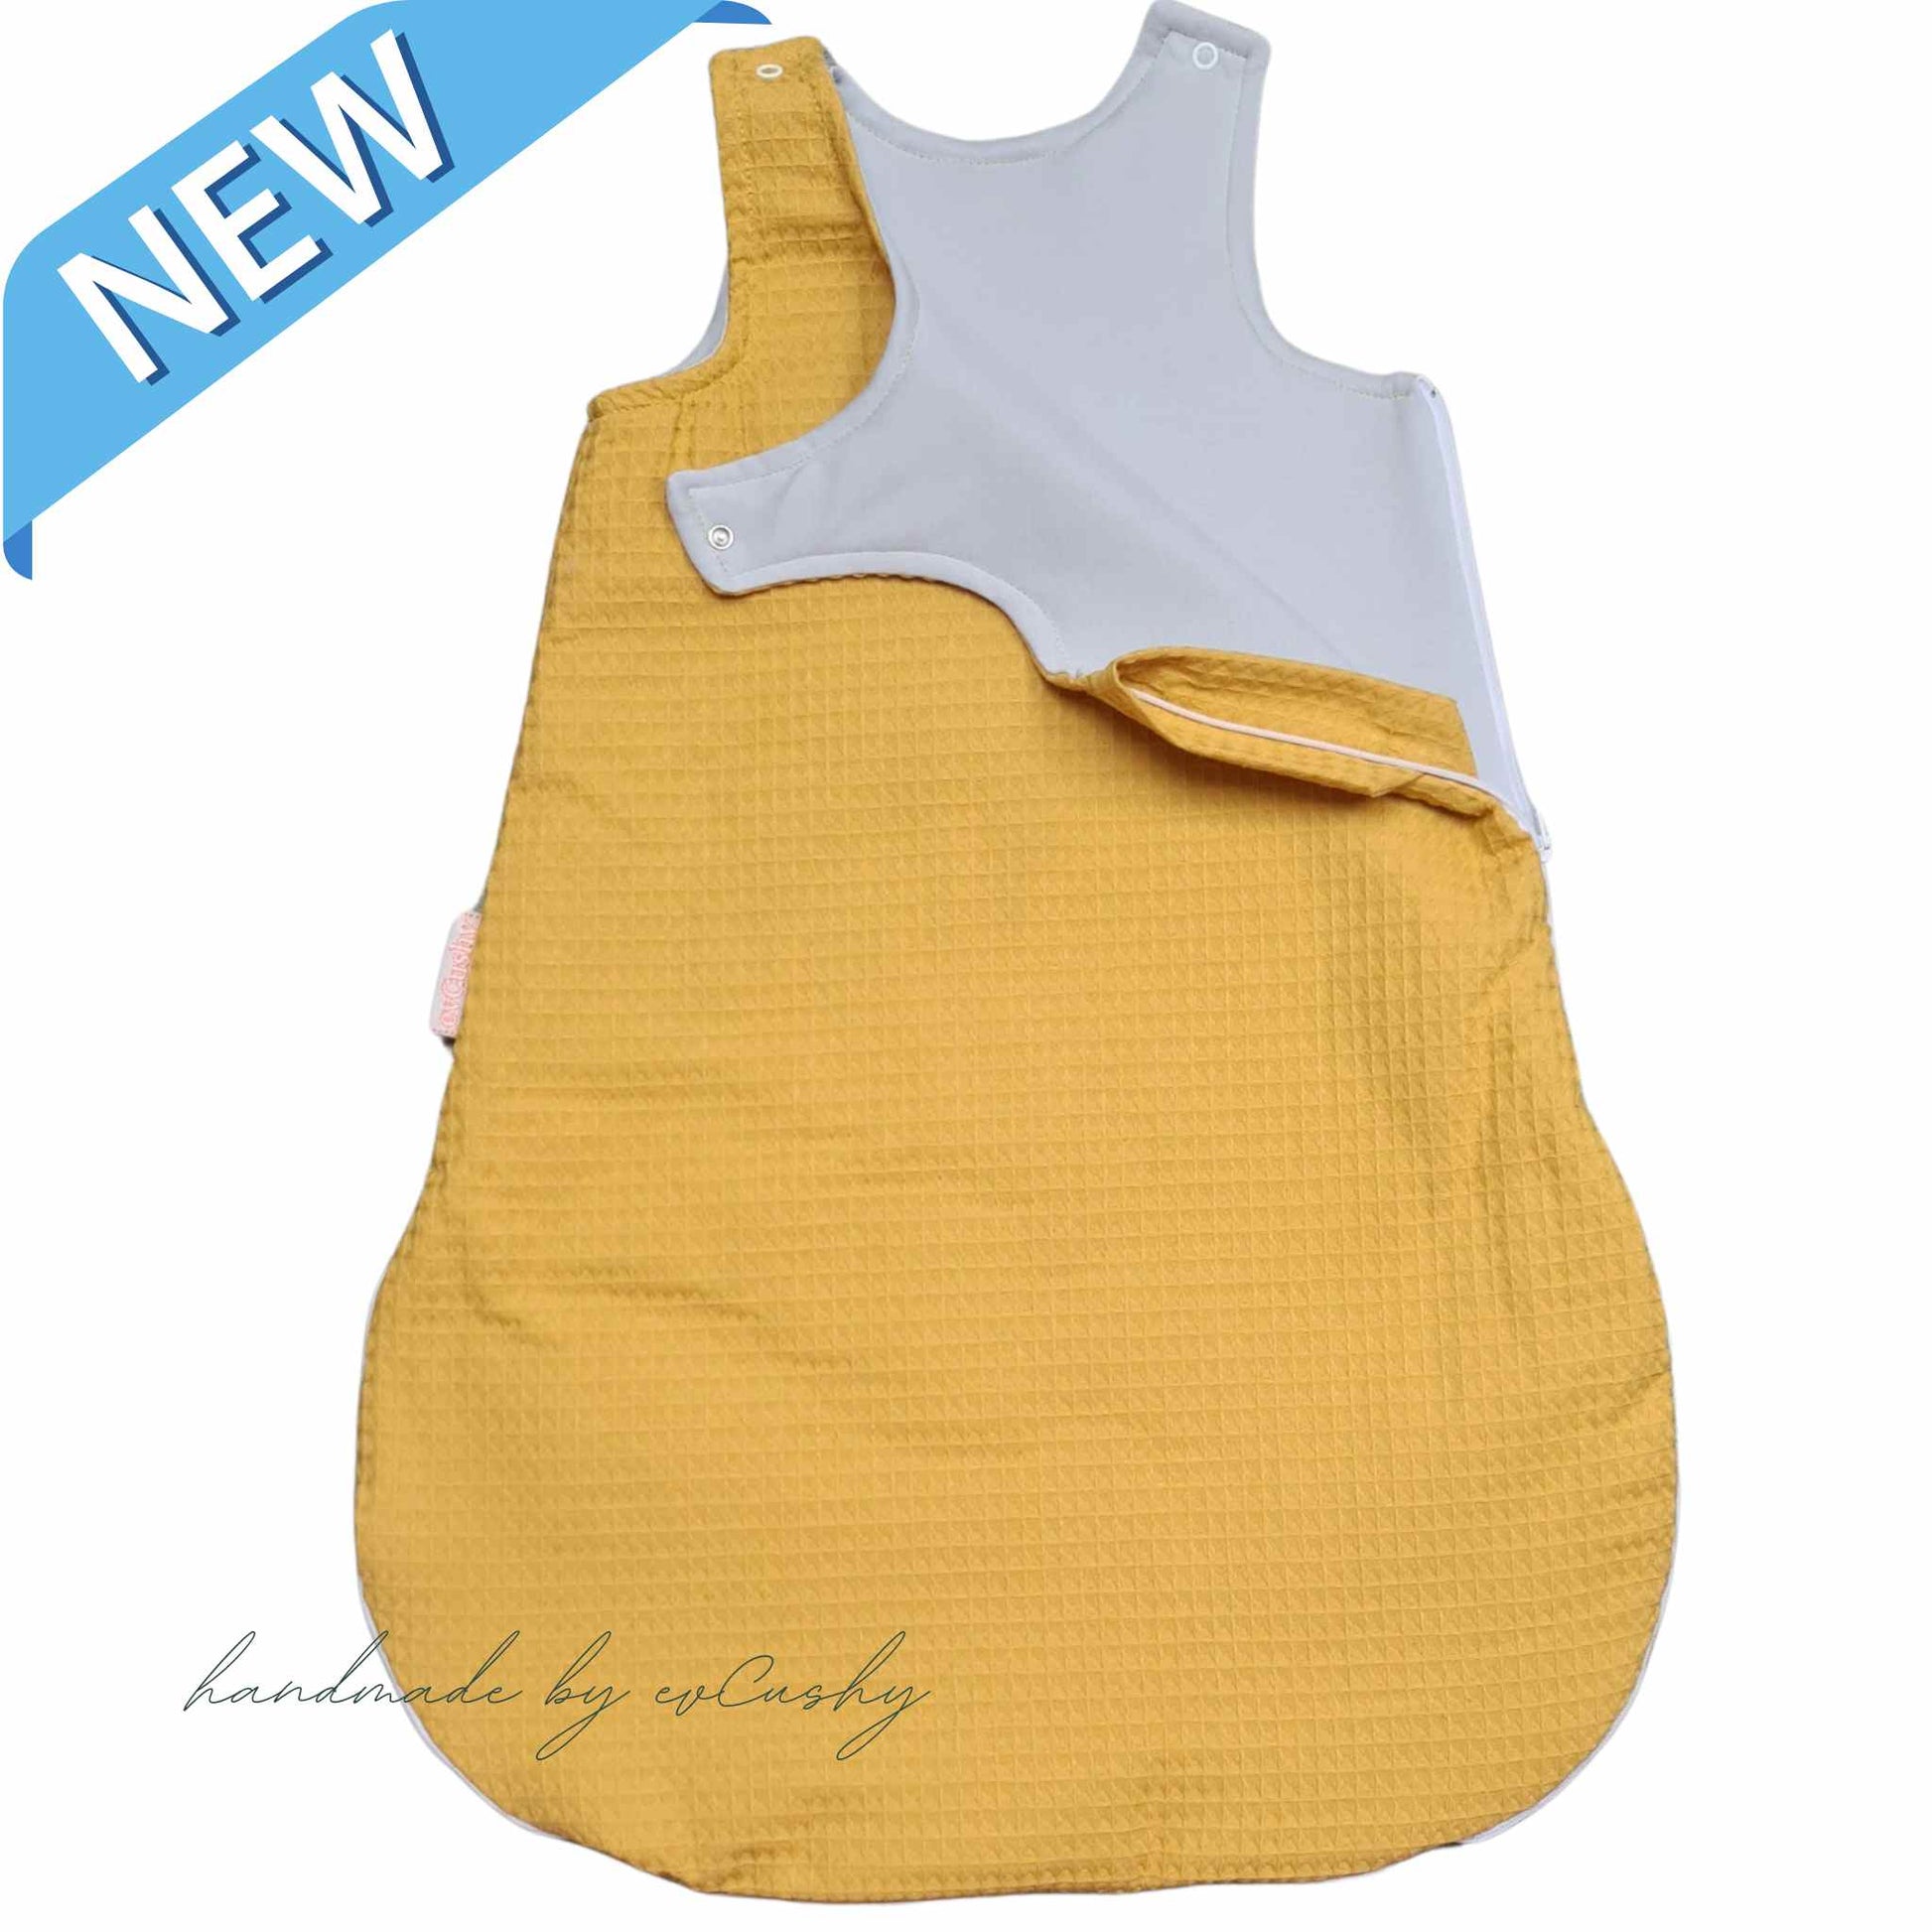 plain sleeping bag for baby saffron mustard with grey lining 100% cotton 6-18 months in Ireland